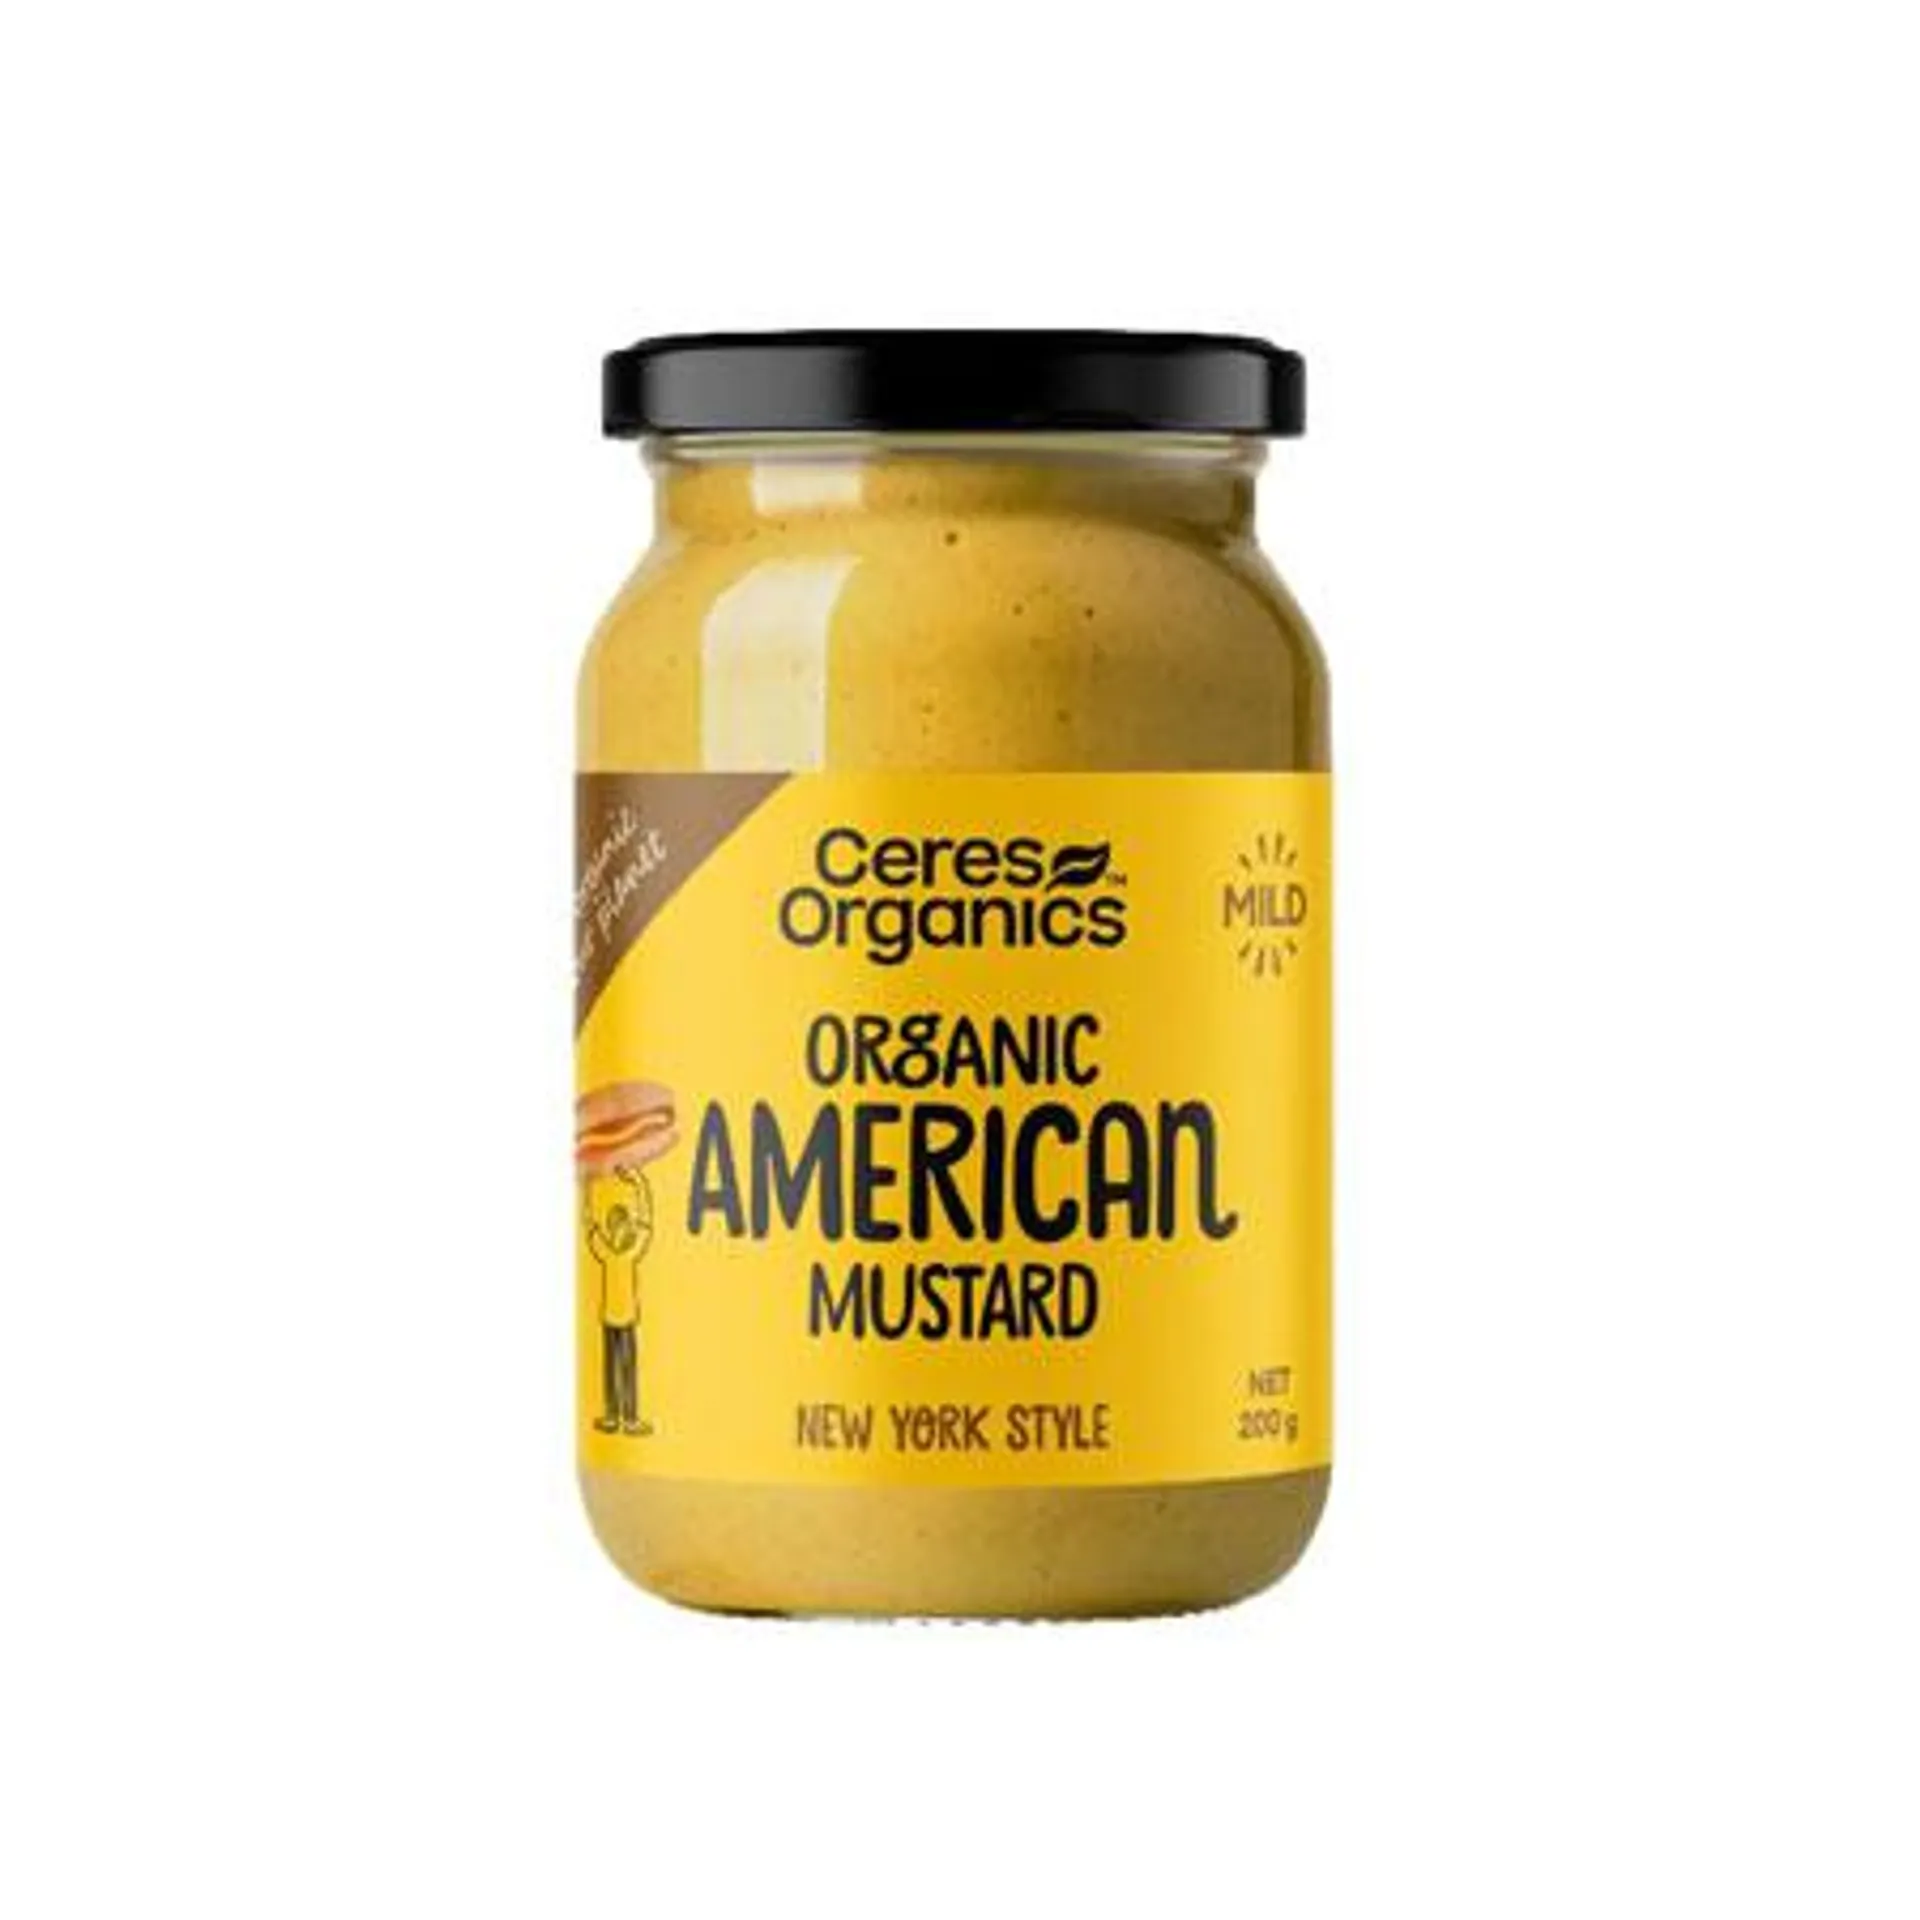 Ceres Organics American Mustard